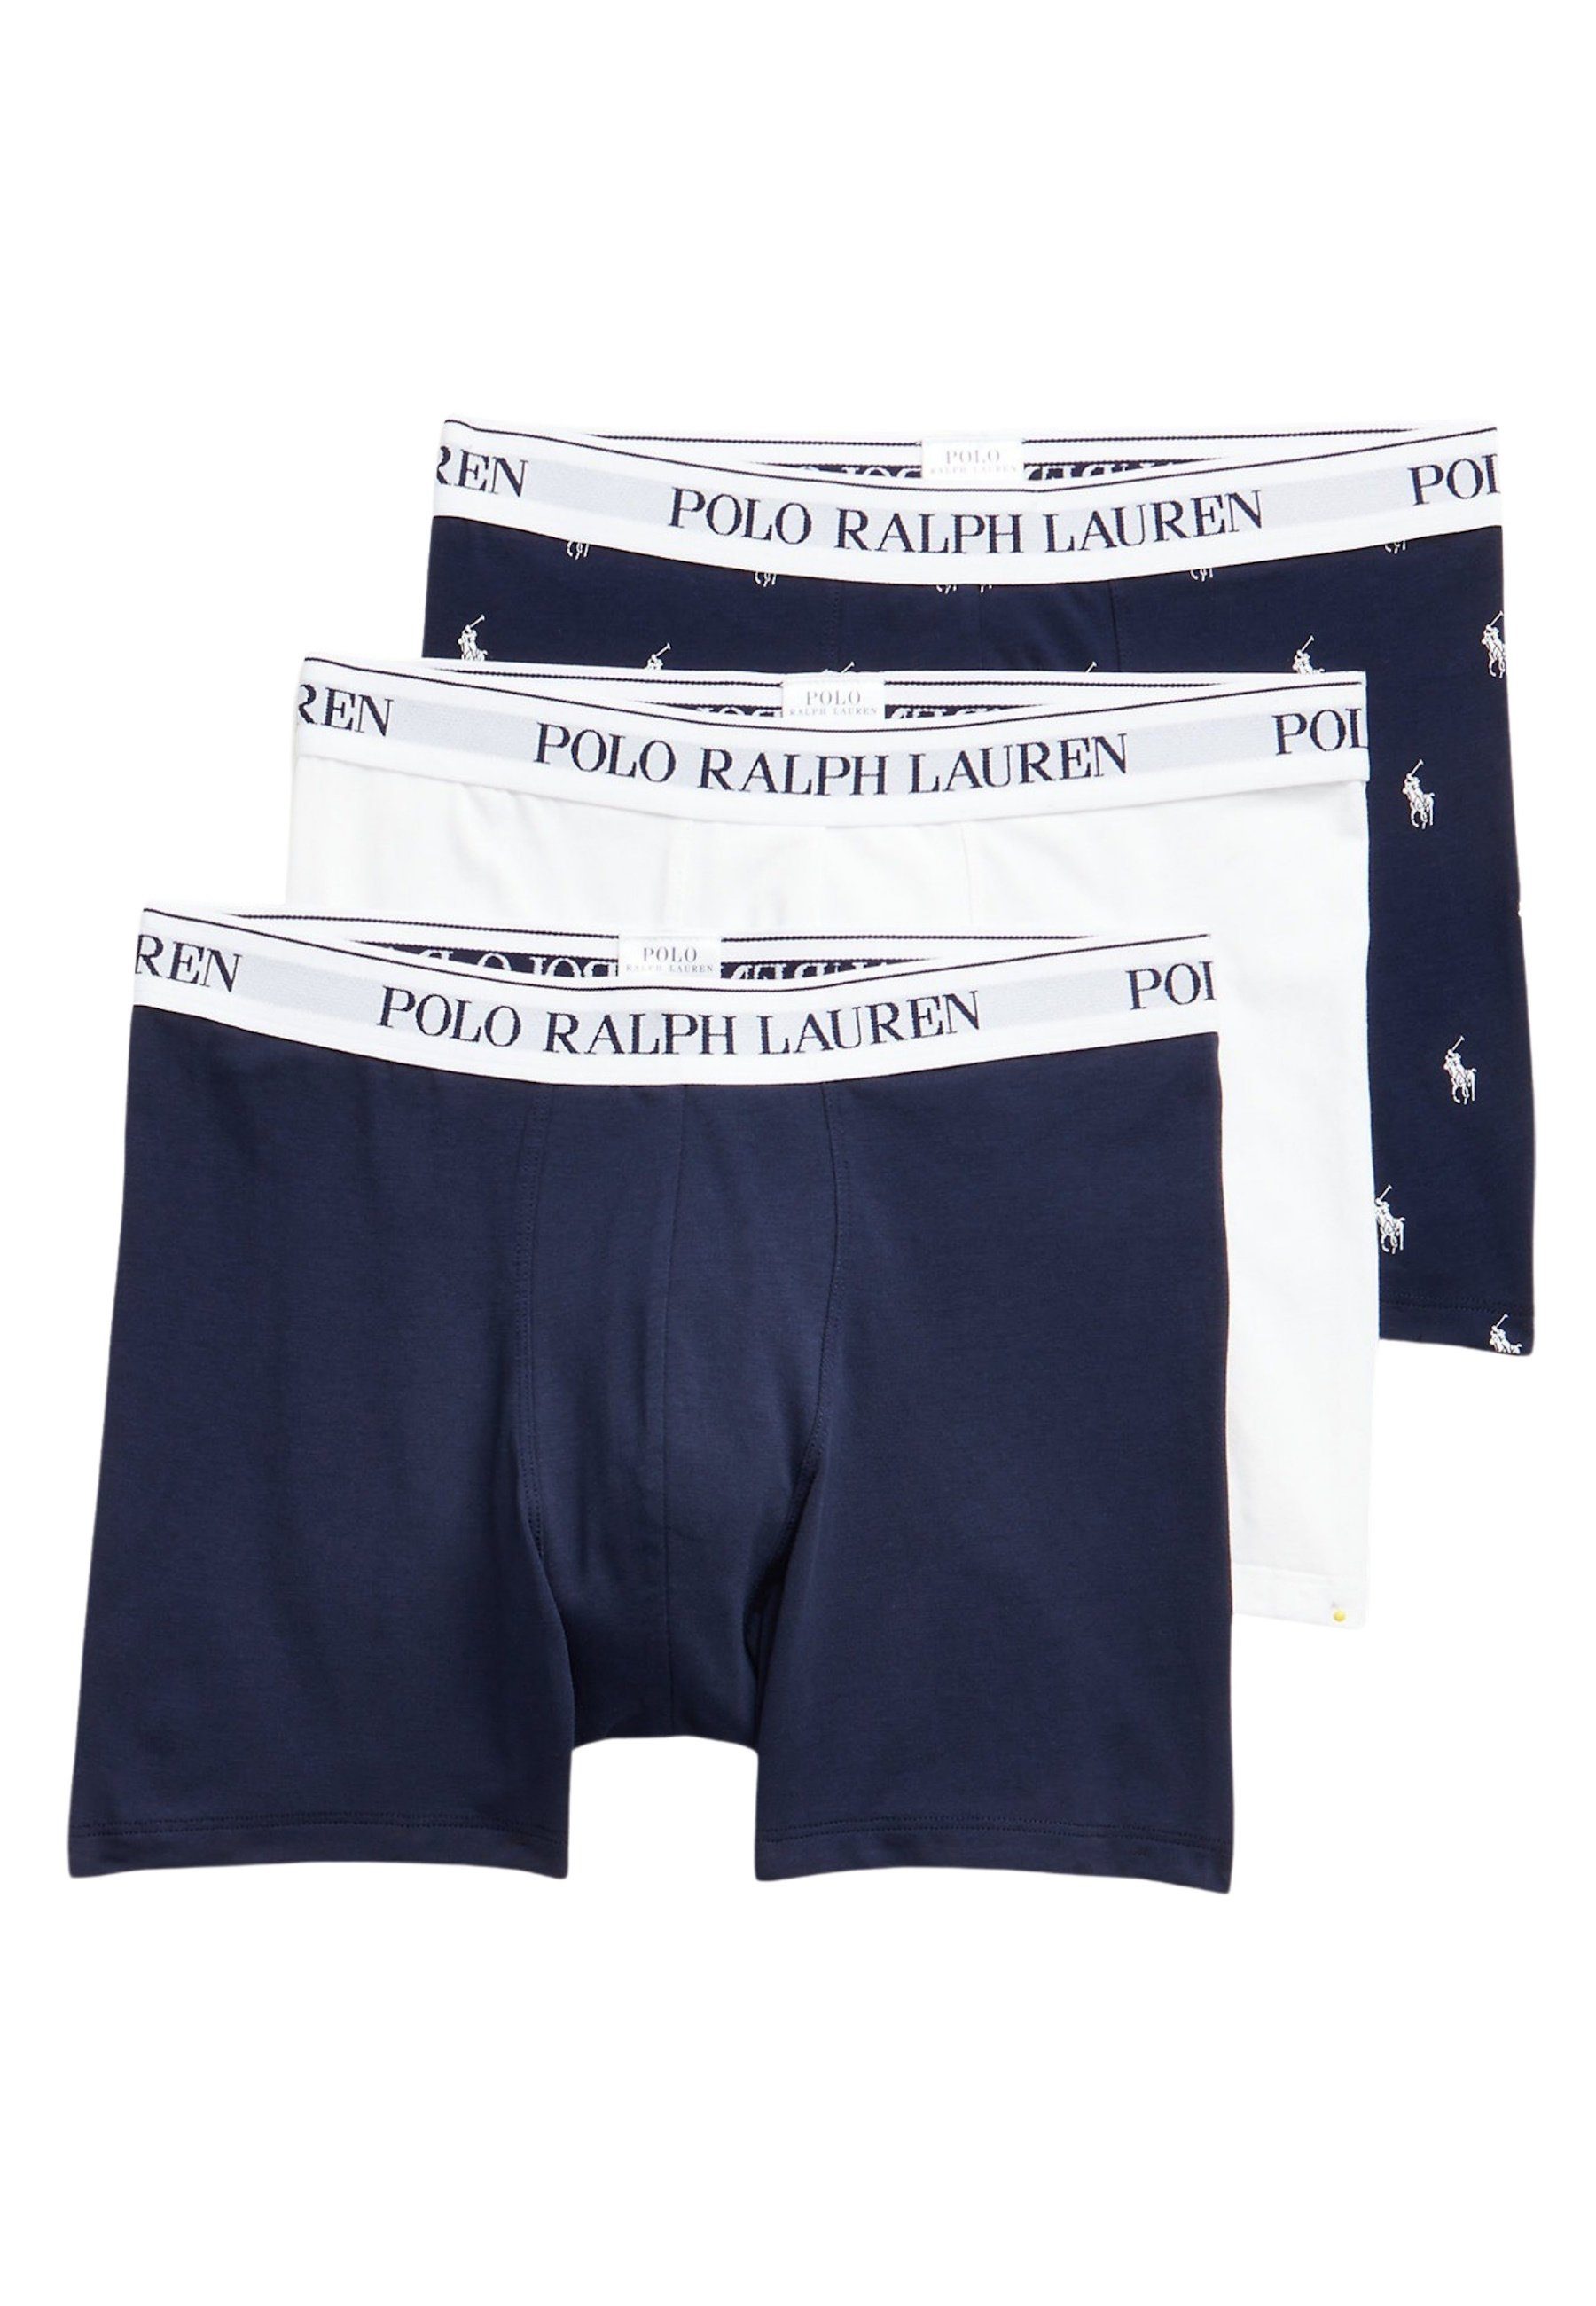 Polo Ralph Lauren Ralph Lauren Boxershorts Unterhose Boxerslips 3er Pack (3-St) Dunkelblau/Weiß